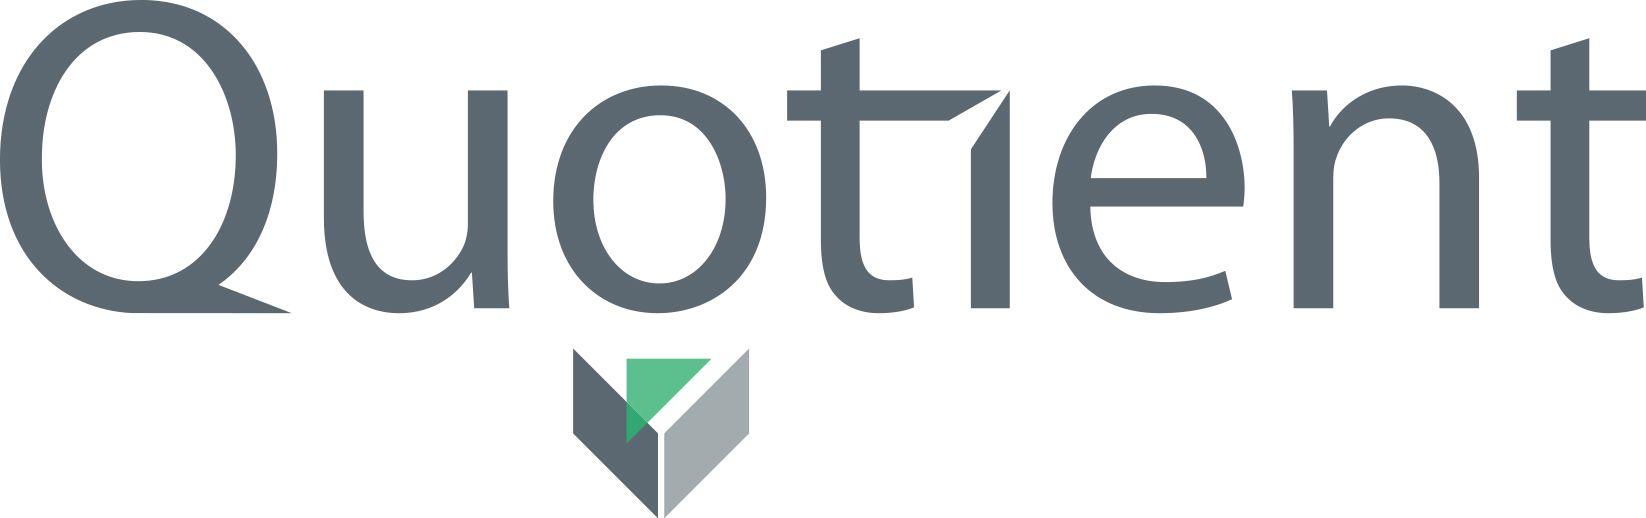 Quotient Logo - Quotient Technology Inc. - New Analytics Platform From Quotient ...